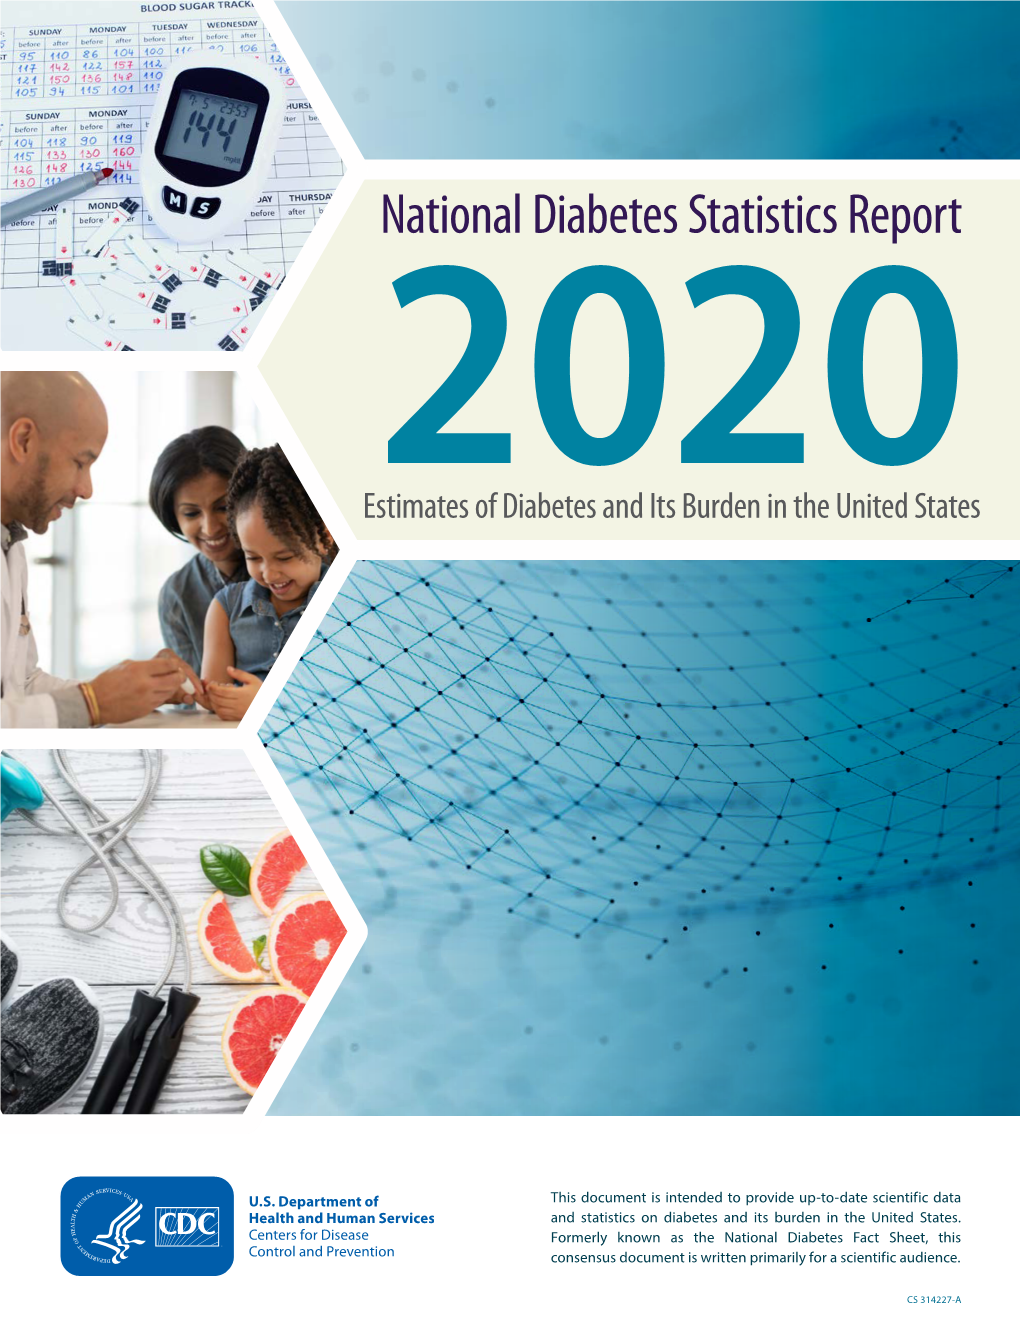 National Diabetes Statistics Report 2020. Estimates of Diabetes and Its